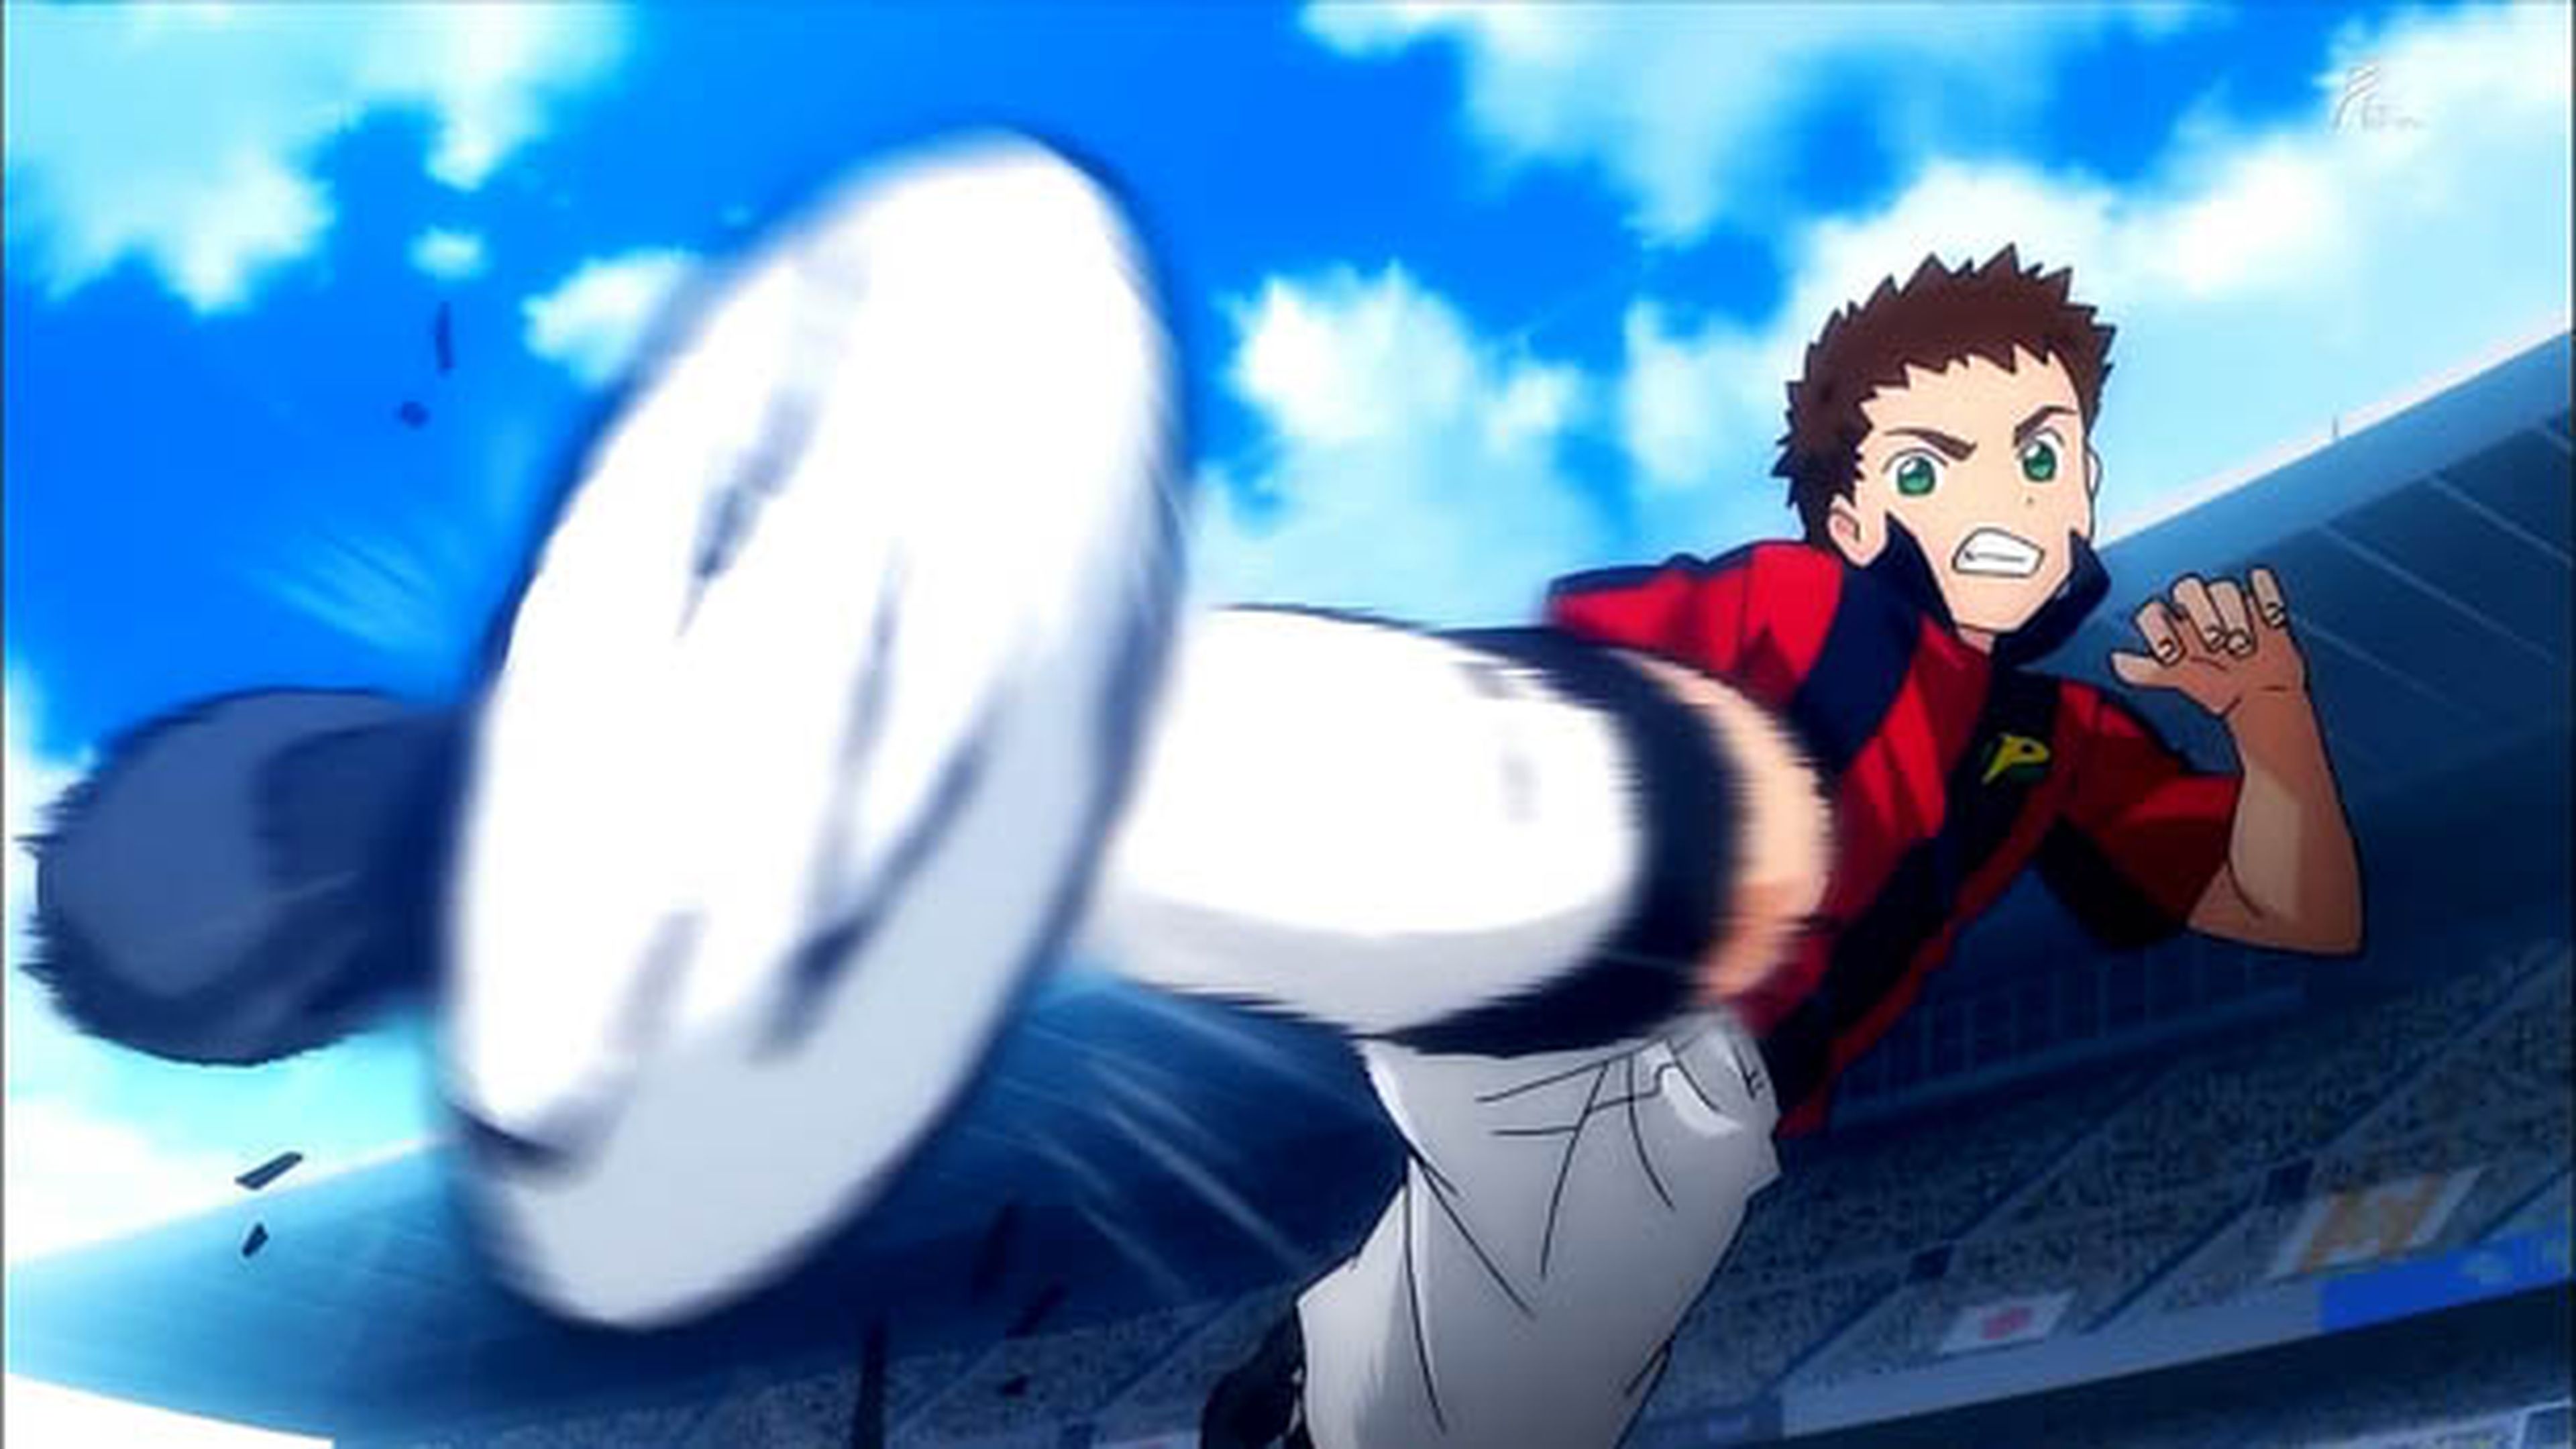 Ginga e Kick Off!!, otro anime sobre fútbol